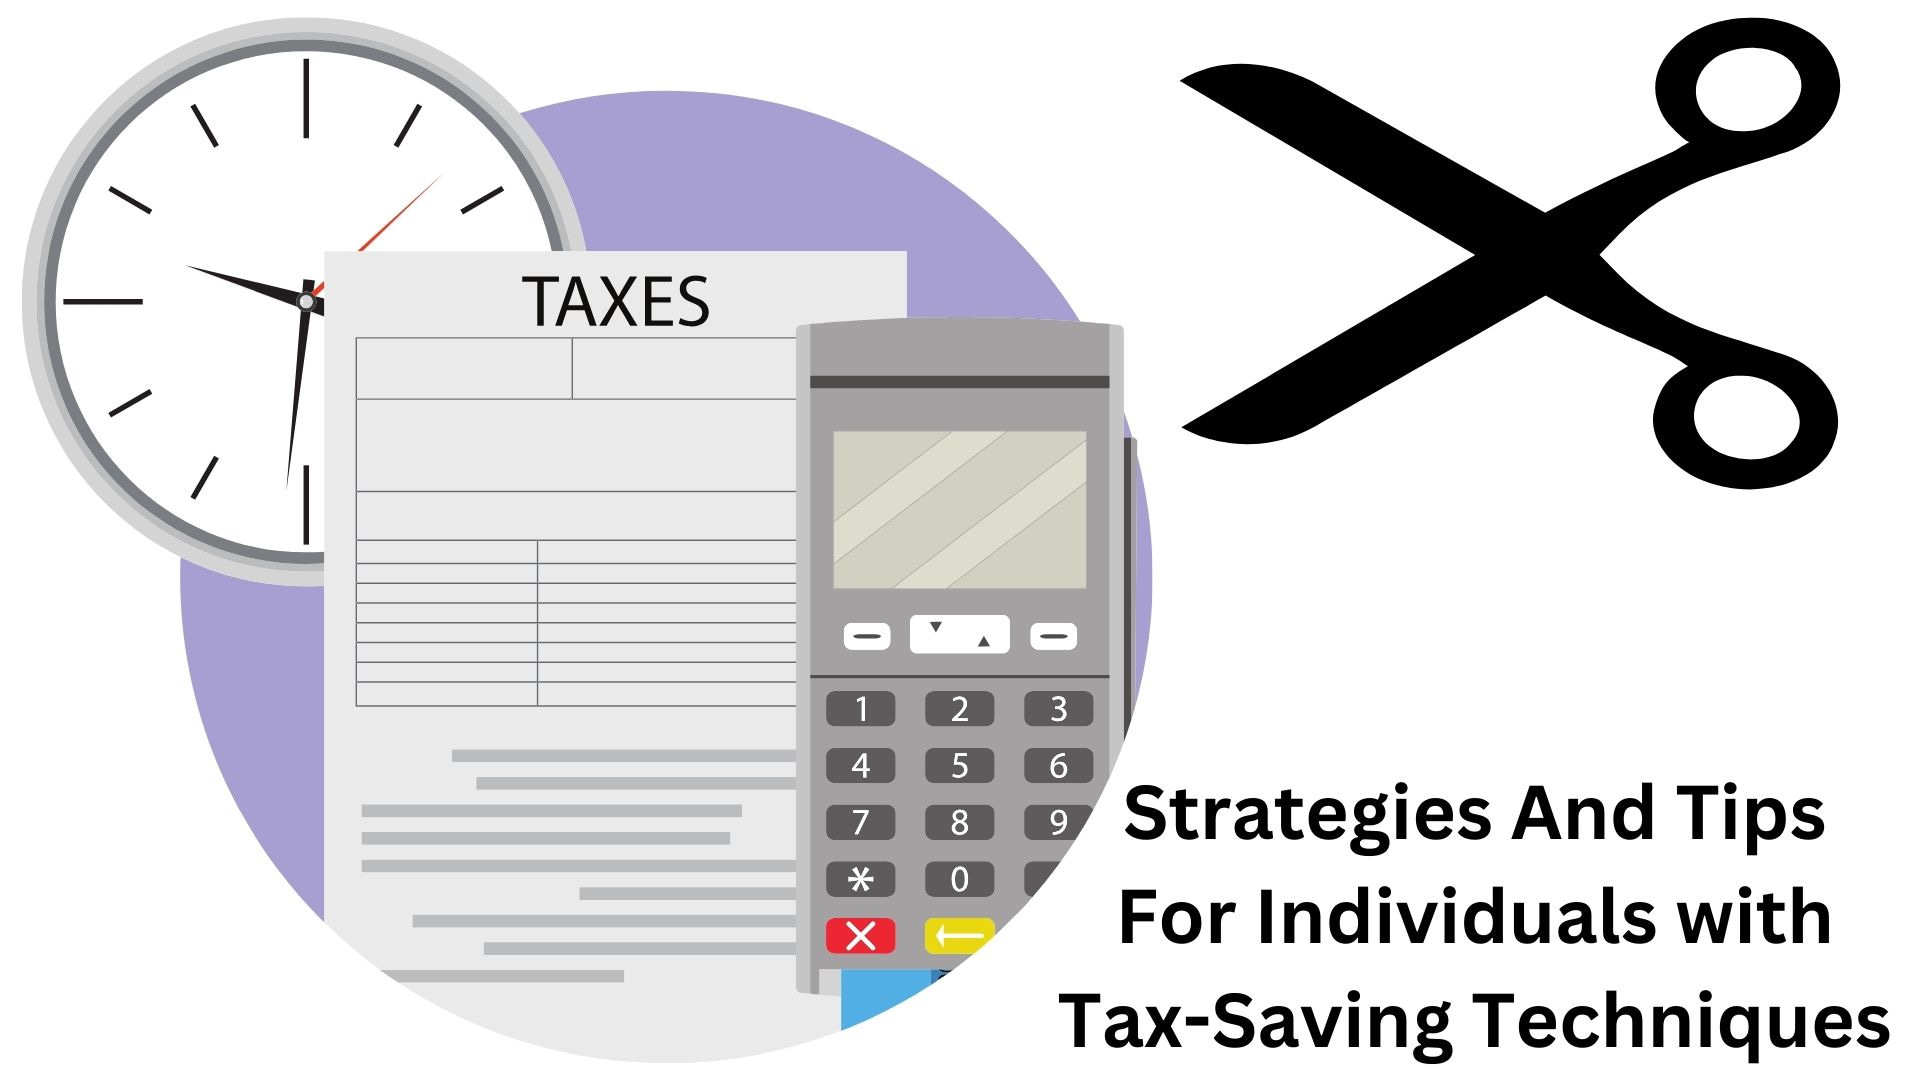 Tax-Saving Techniques